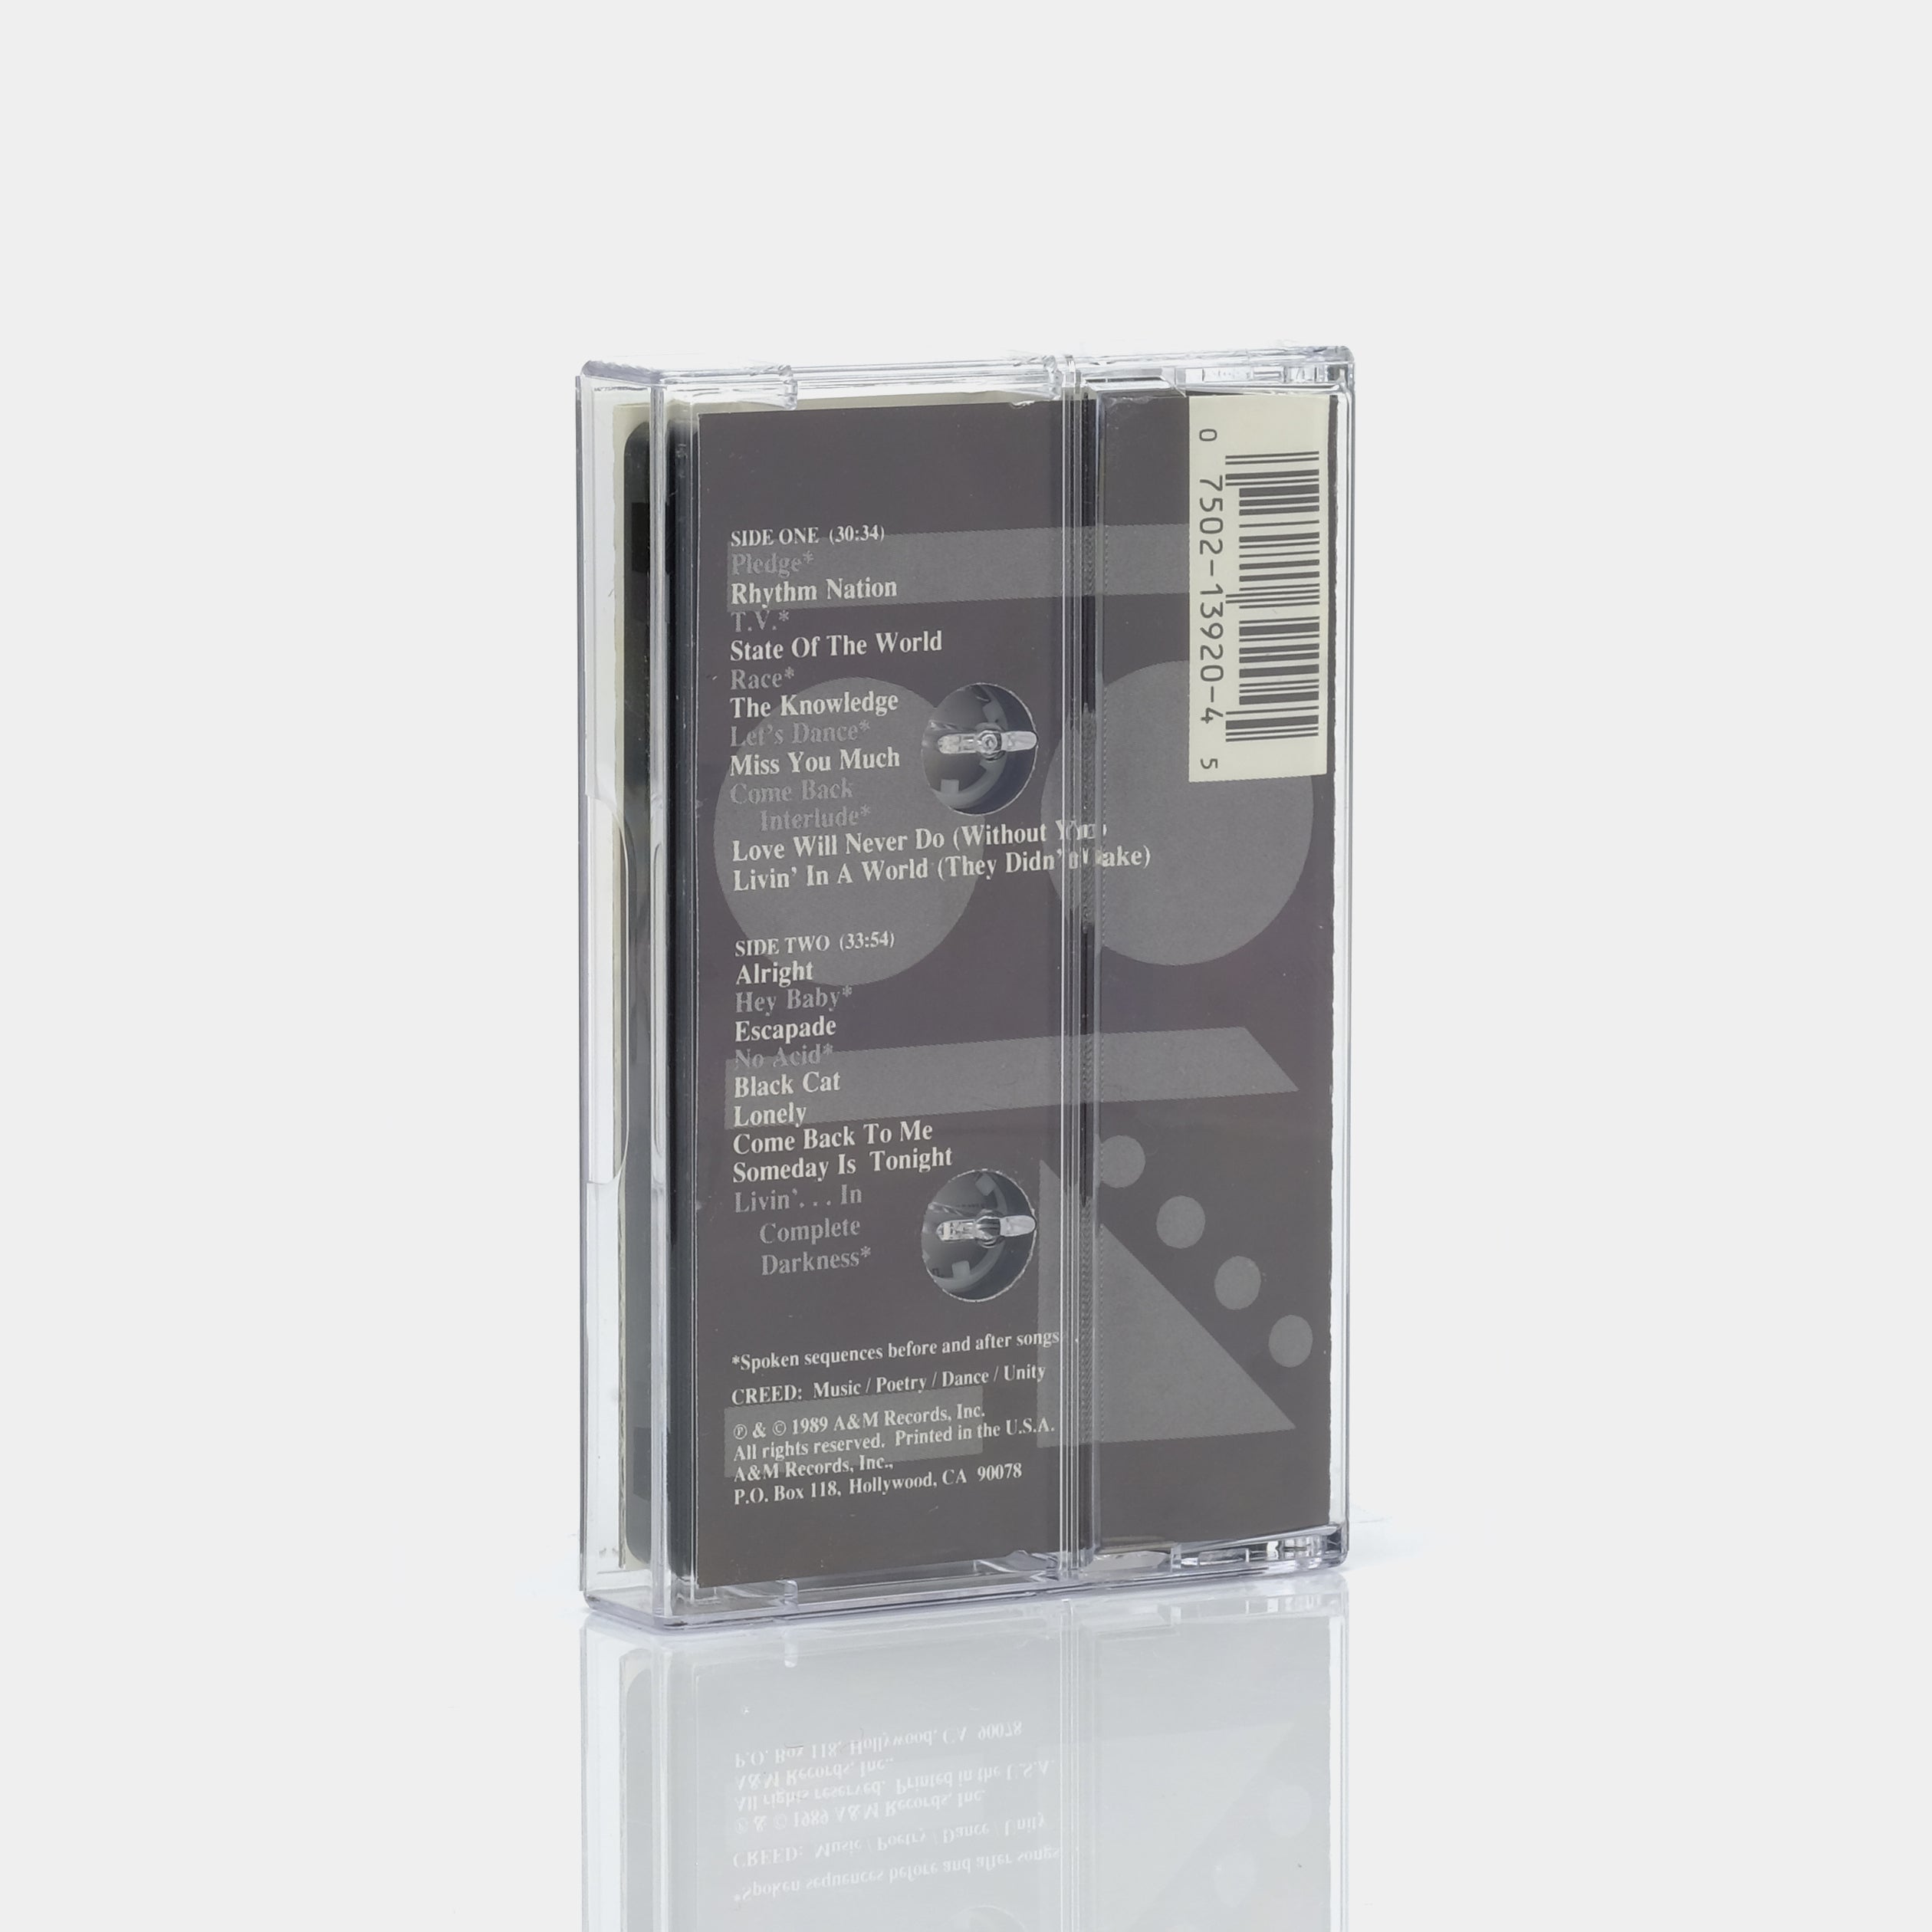 Janet Jackson - Janet Jackson's Rhythm Nation 1814 Cassette Tape